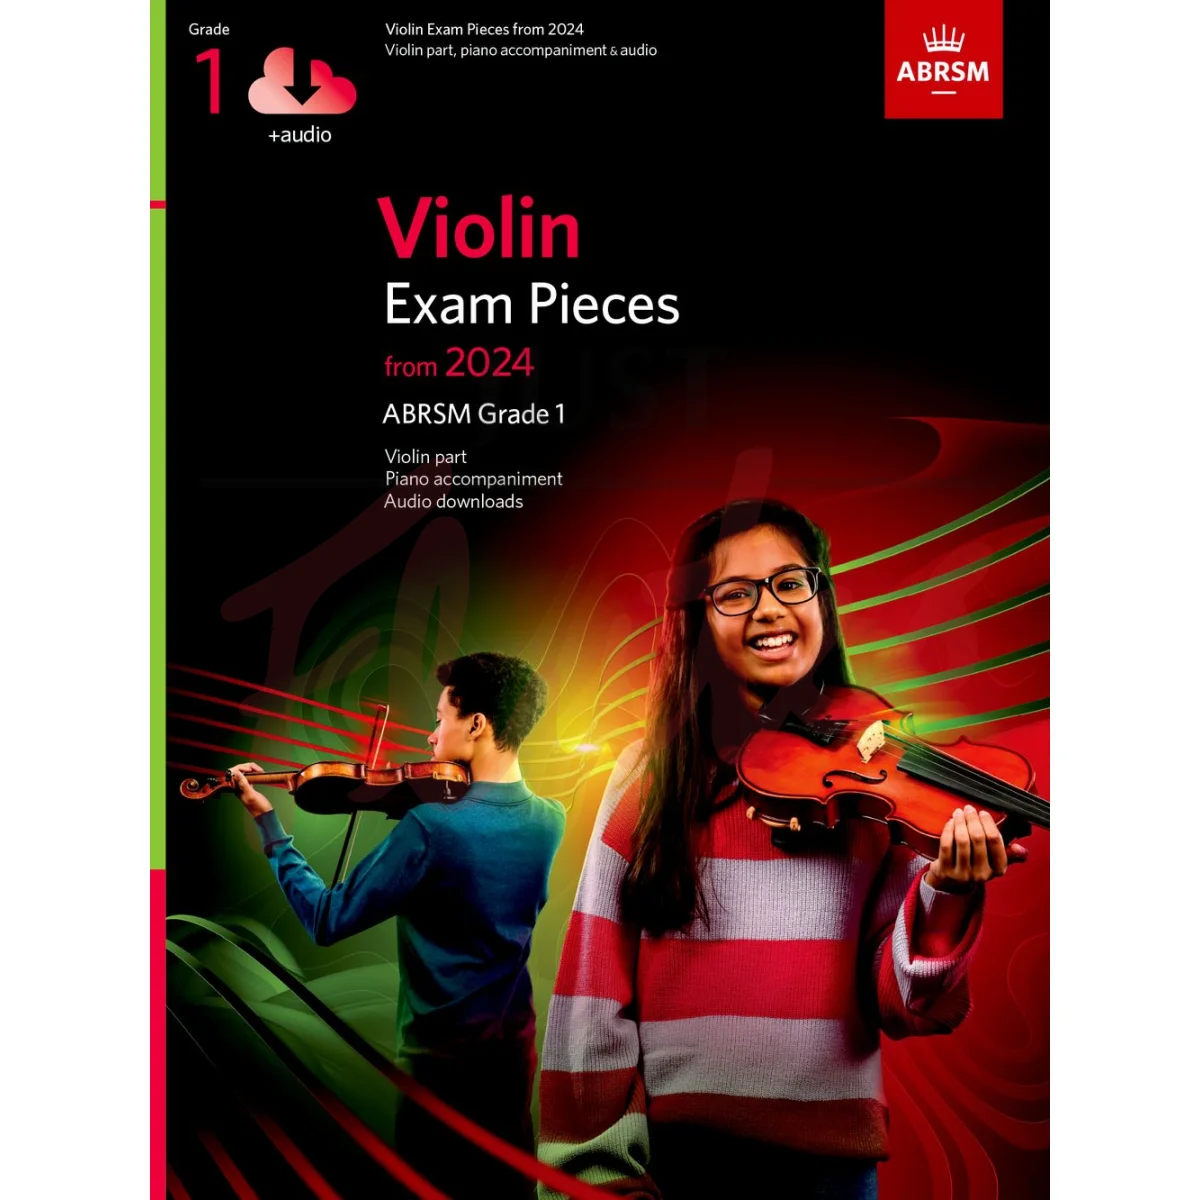 Violin Exam Pieces from 2024, Grade 1